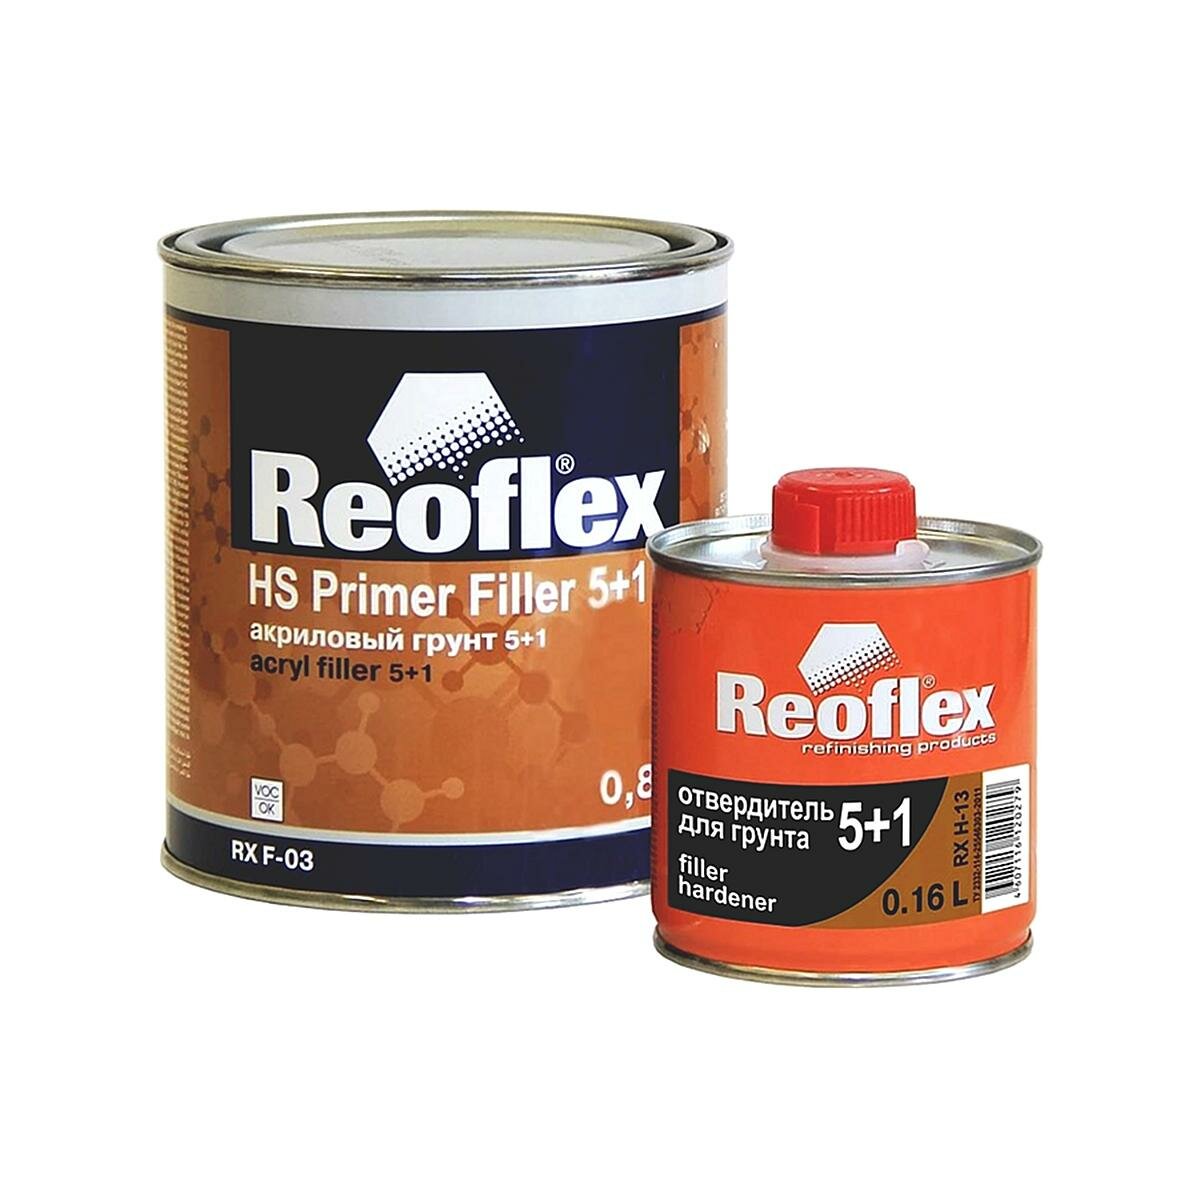 REOFLEX RX F-03 5+1 HS Primer Filler Акриловый грунт (серый) 08 л. с отвердителем 016 л.